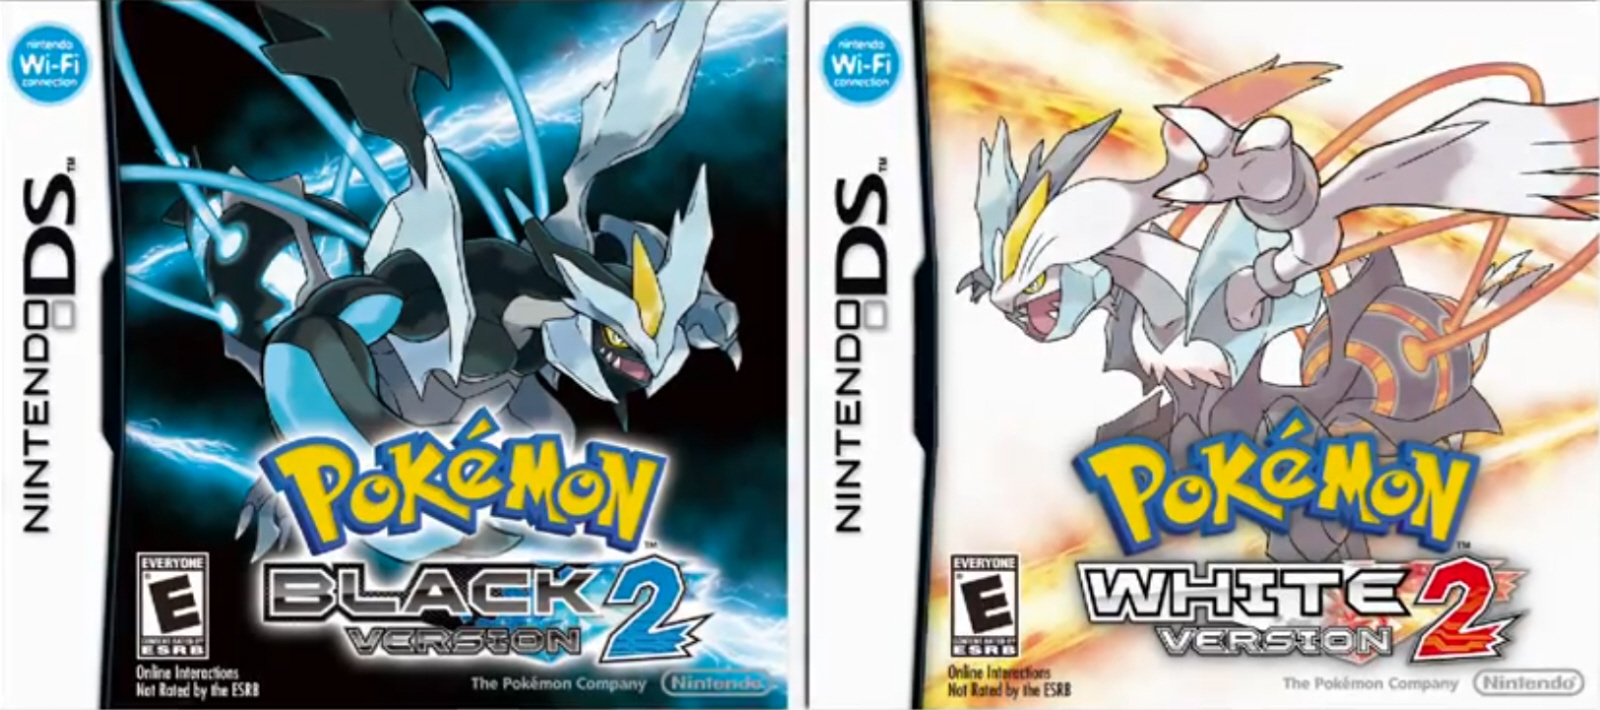 pokemon-white-2-pokemon-black-version-2-box-cover-artworks.jpg